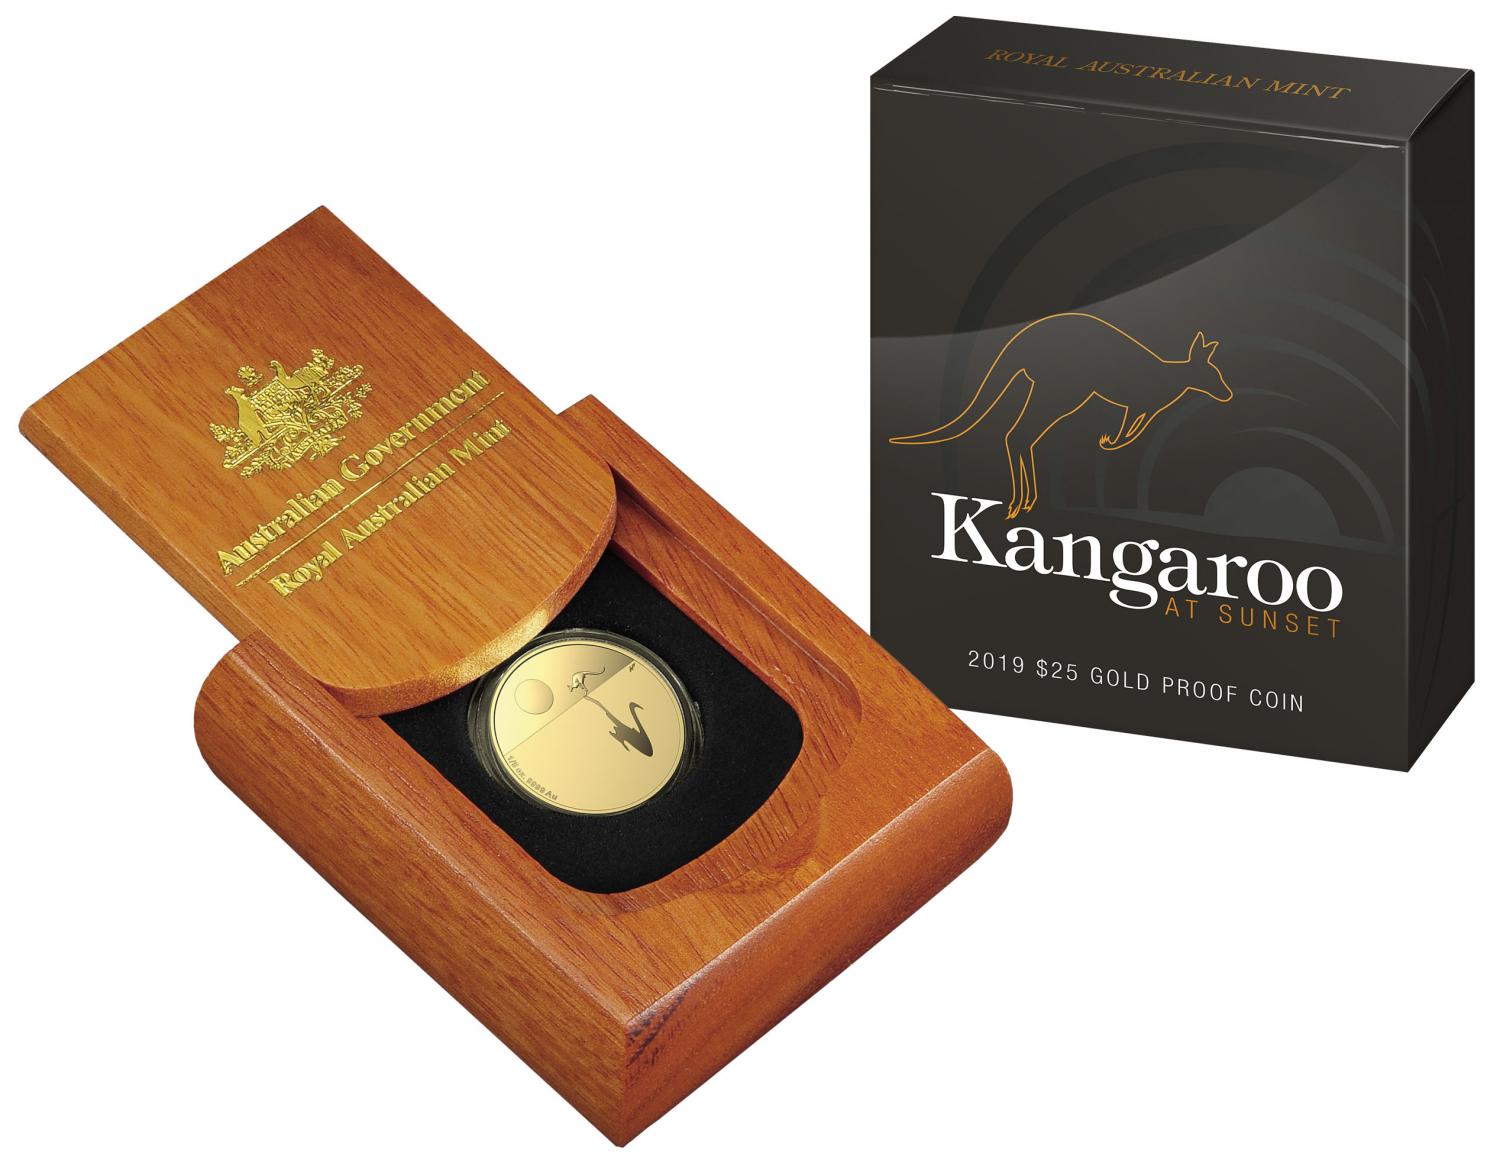 Thumbnail for 2019 Kangaroo at Sunset $25.00 Gold Proof Coin